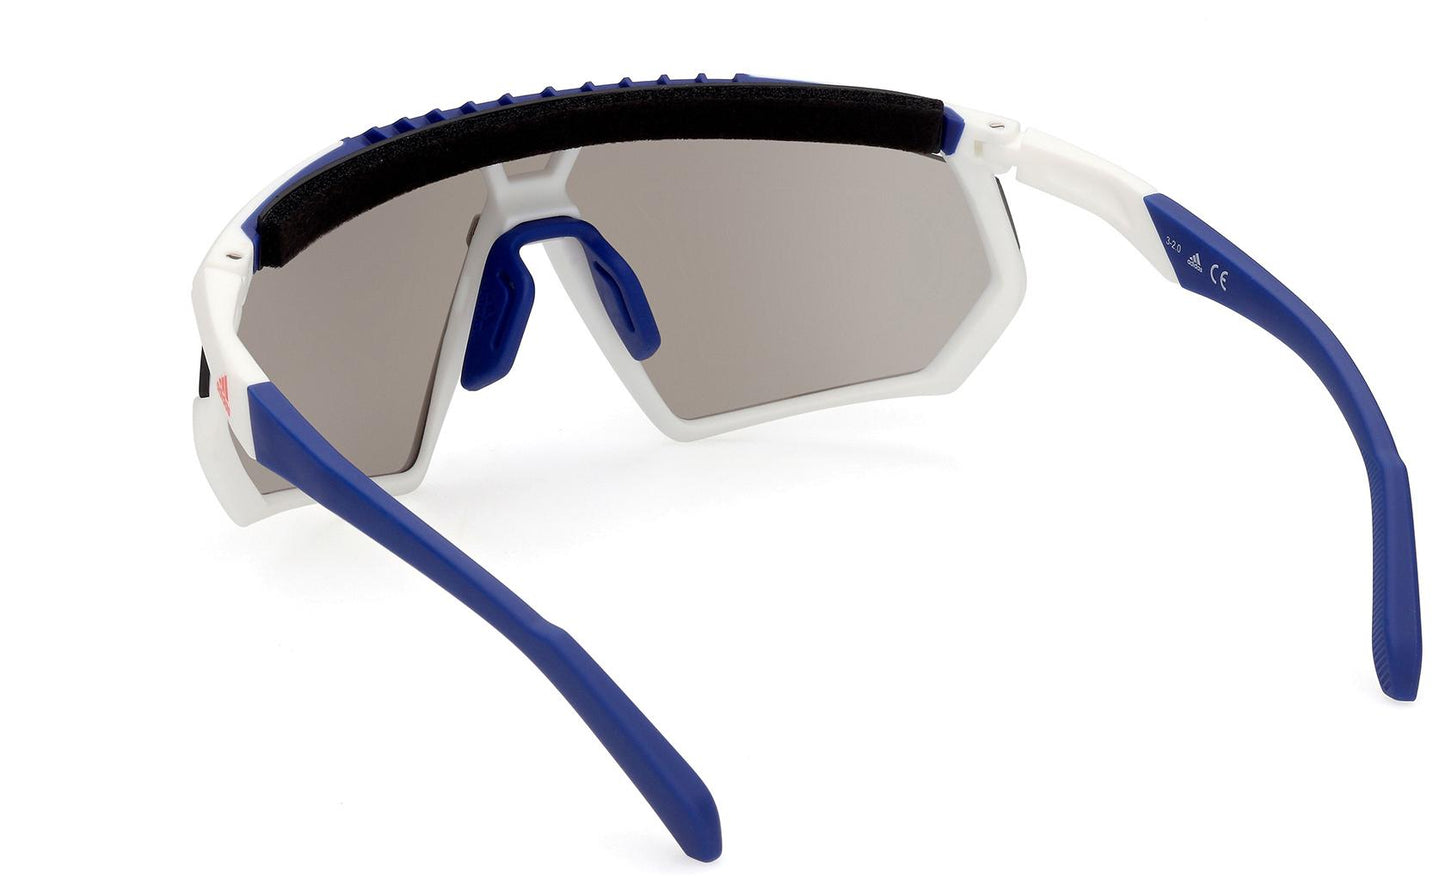 Adidas Sport Sunglasses 21C WHITE